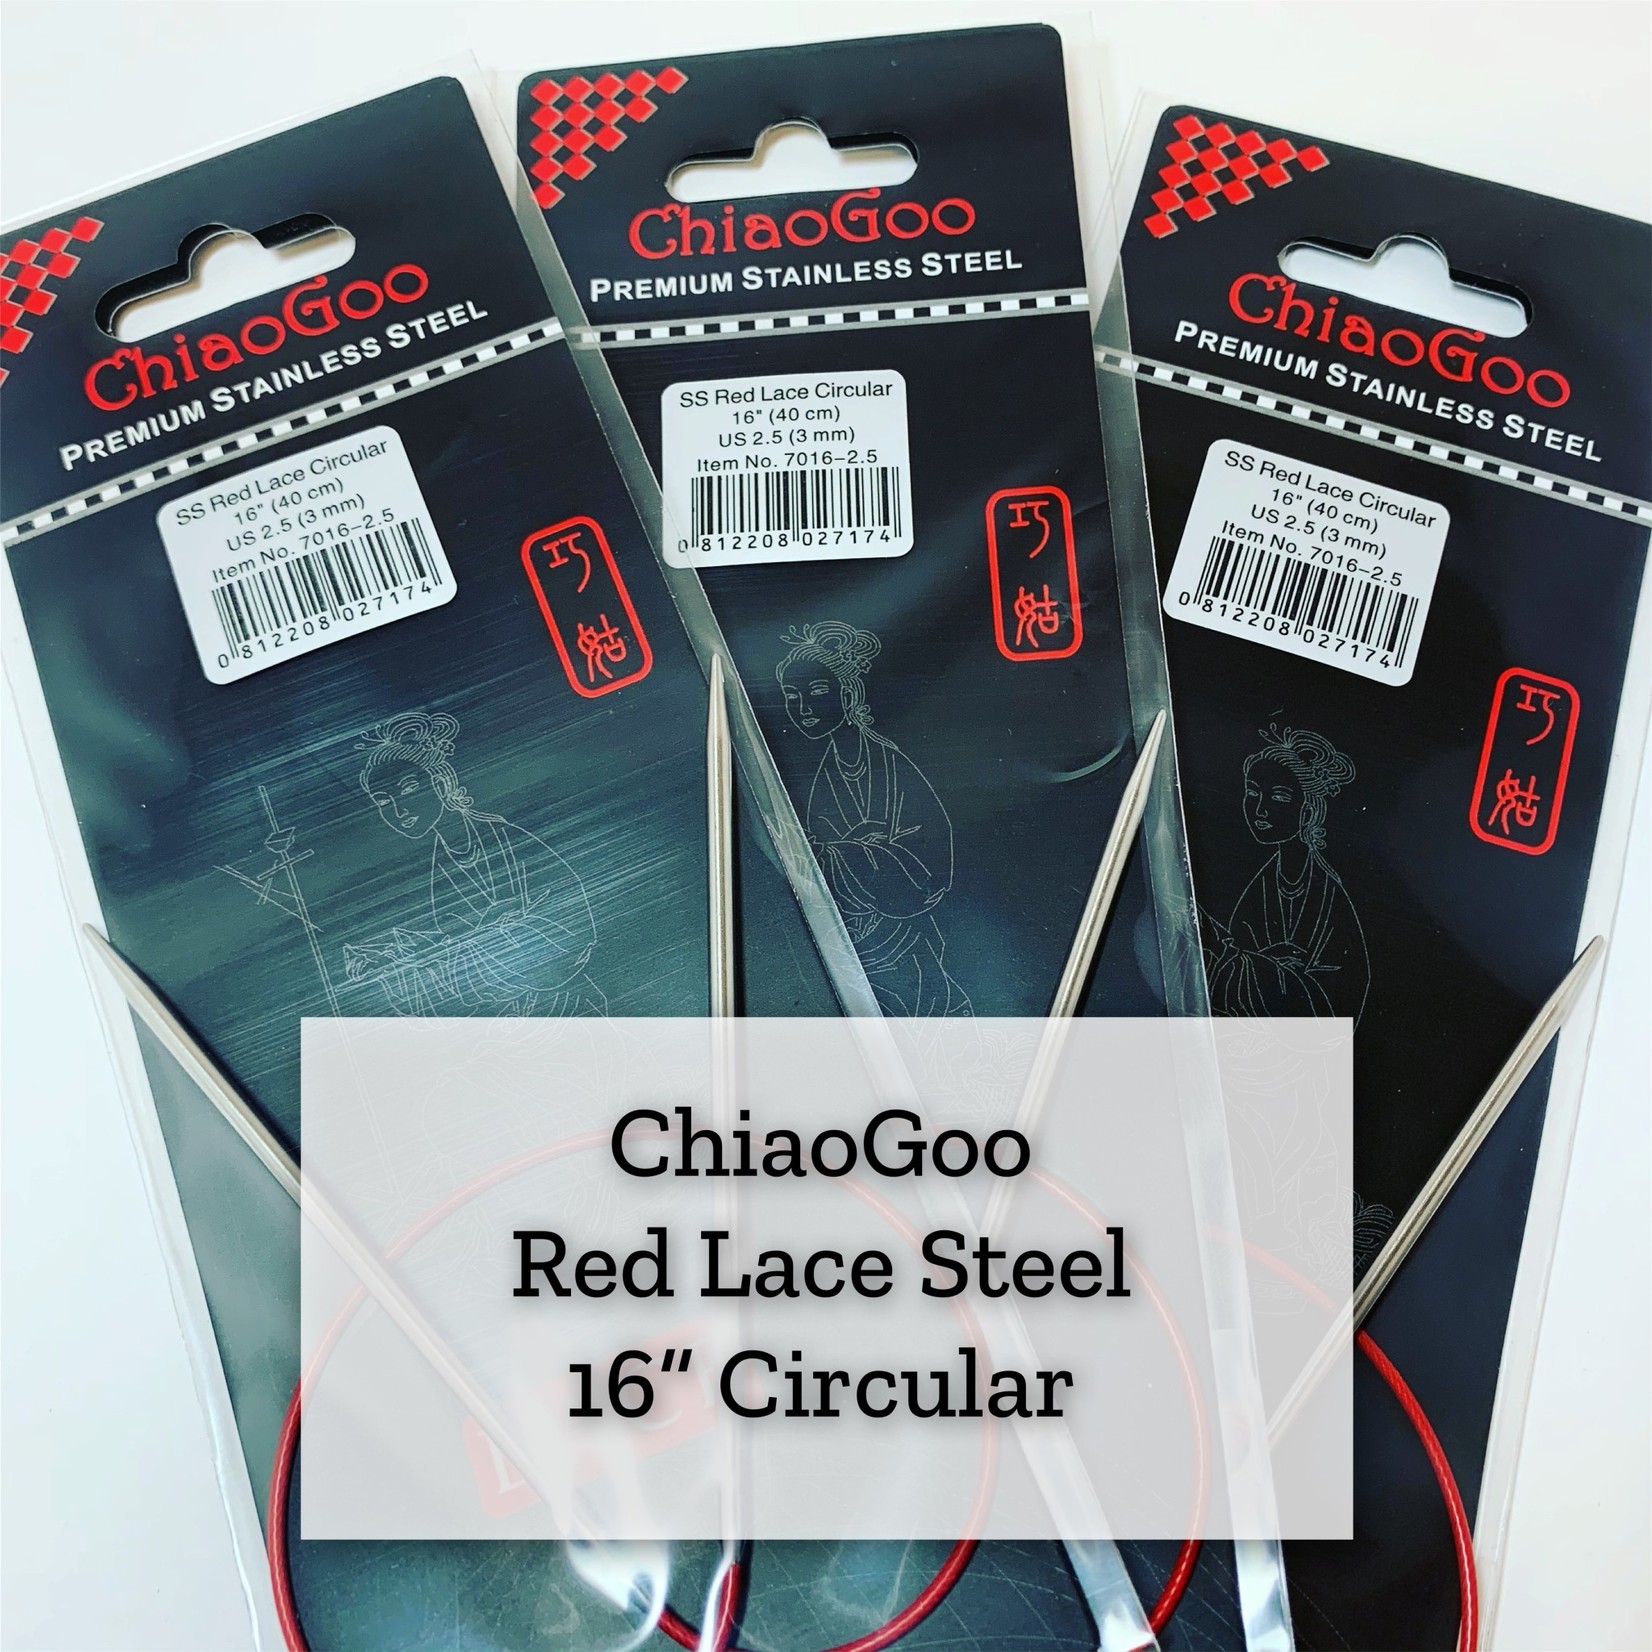 ChiaoGoo Red Lace Steel - 16" 4.5 mm